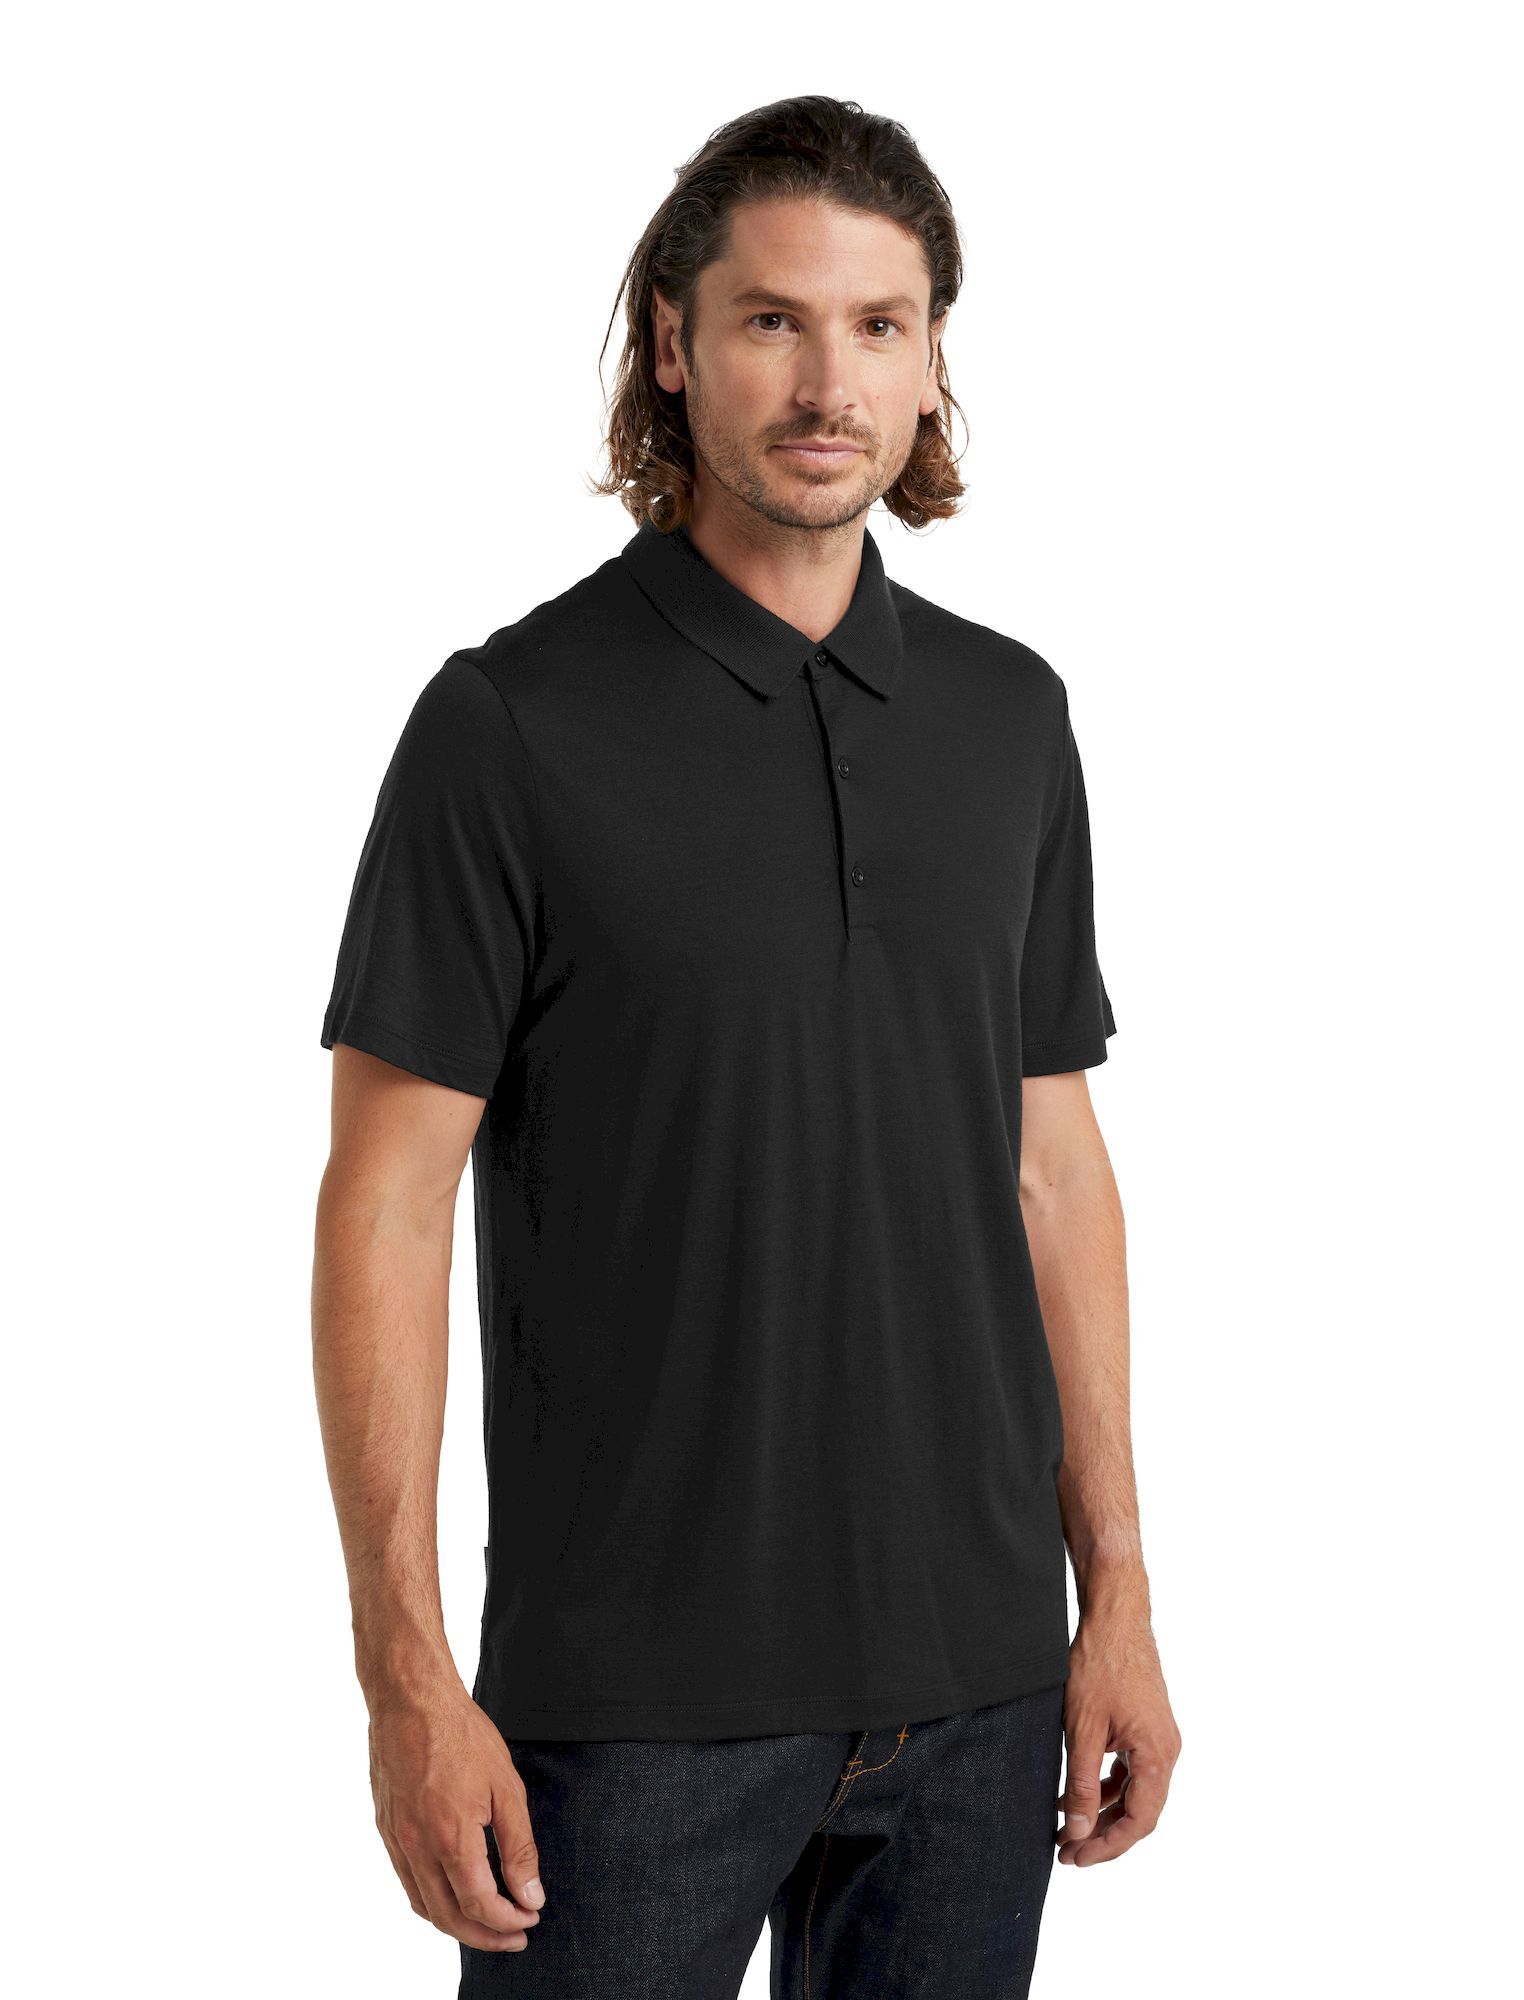 Icebreaker Tech Lite II SS Polo - Polo shirt - Men's